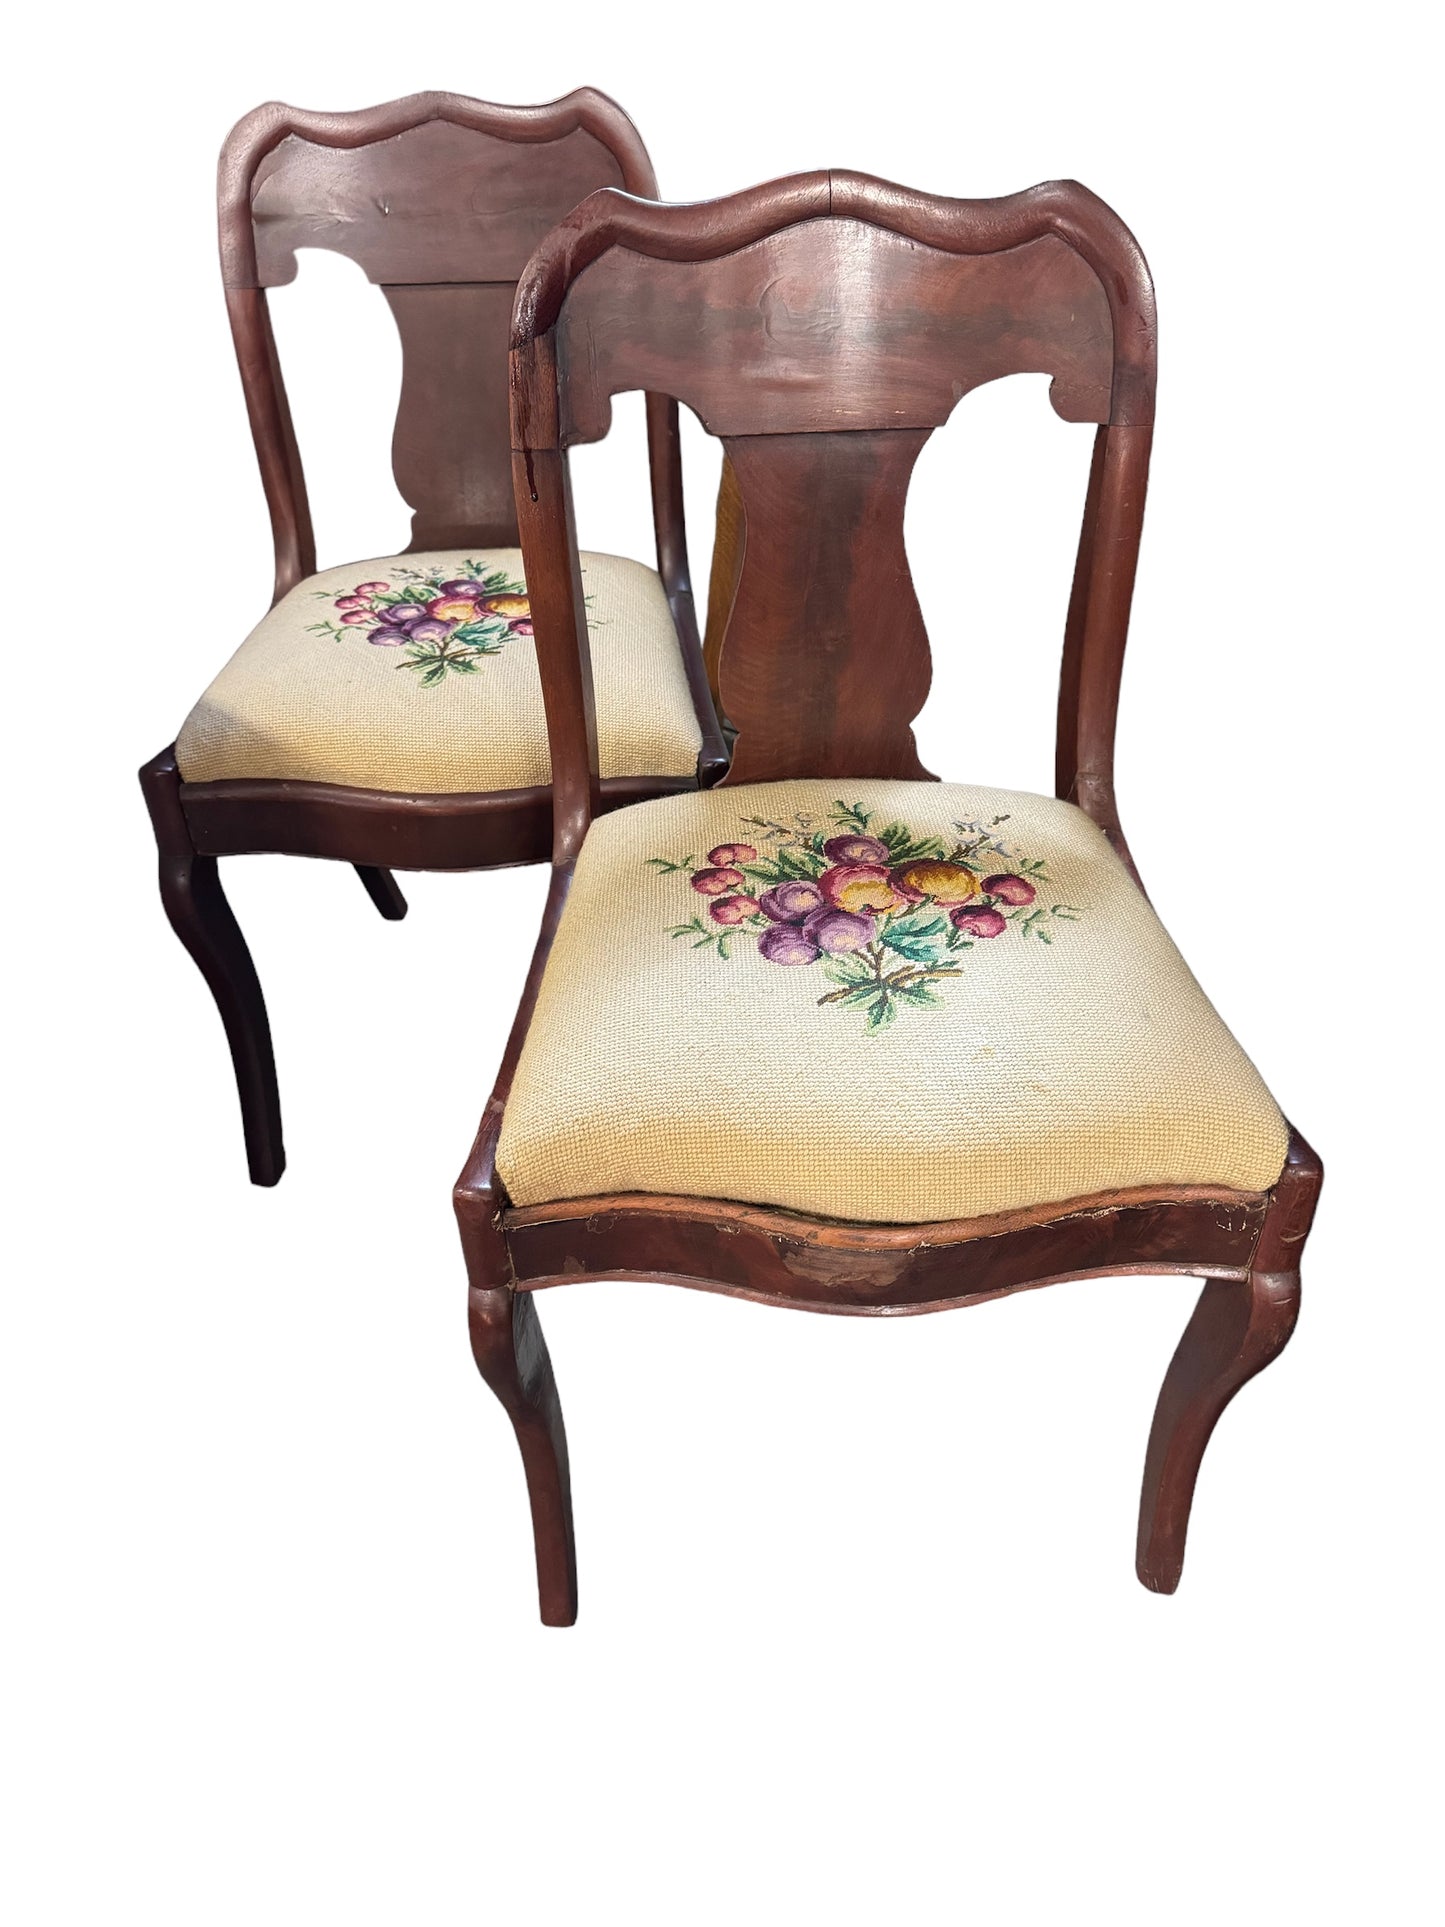 Flame Mahogany Fiddleback Chairs Needlework Upholstered Seats